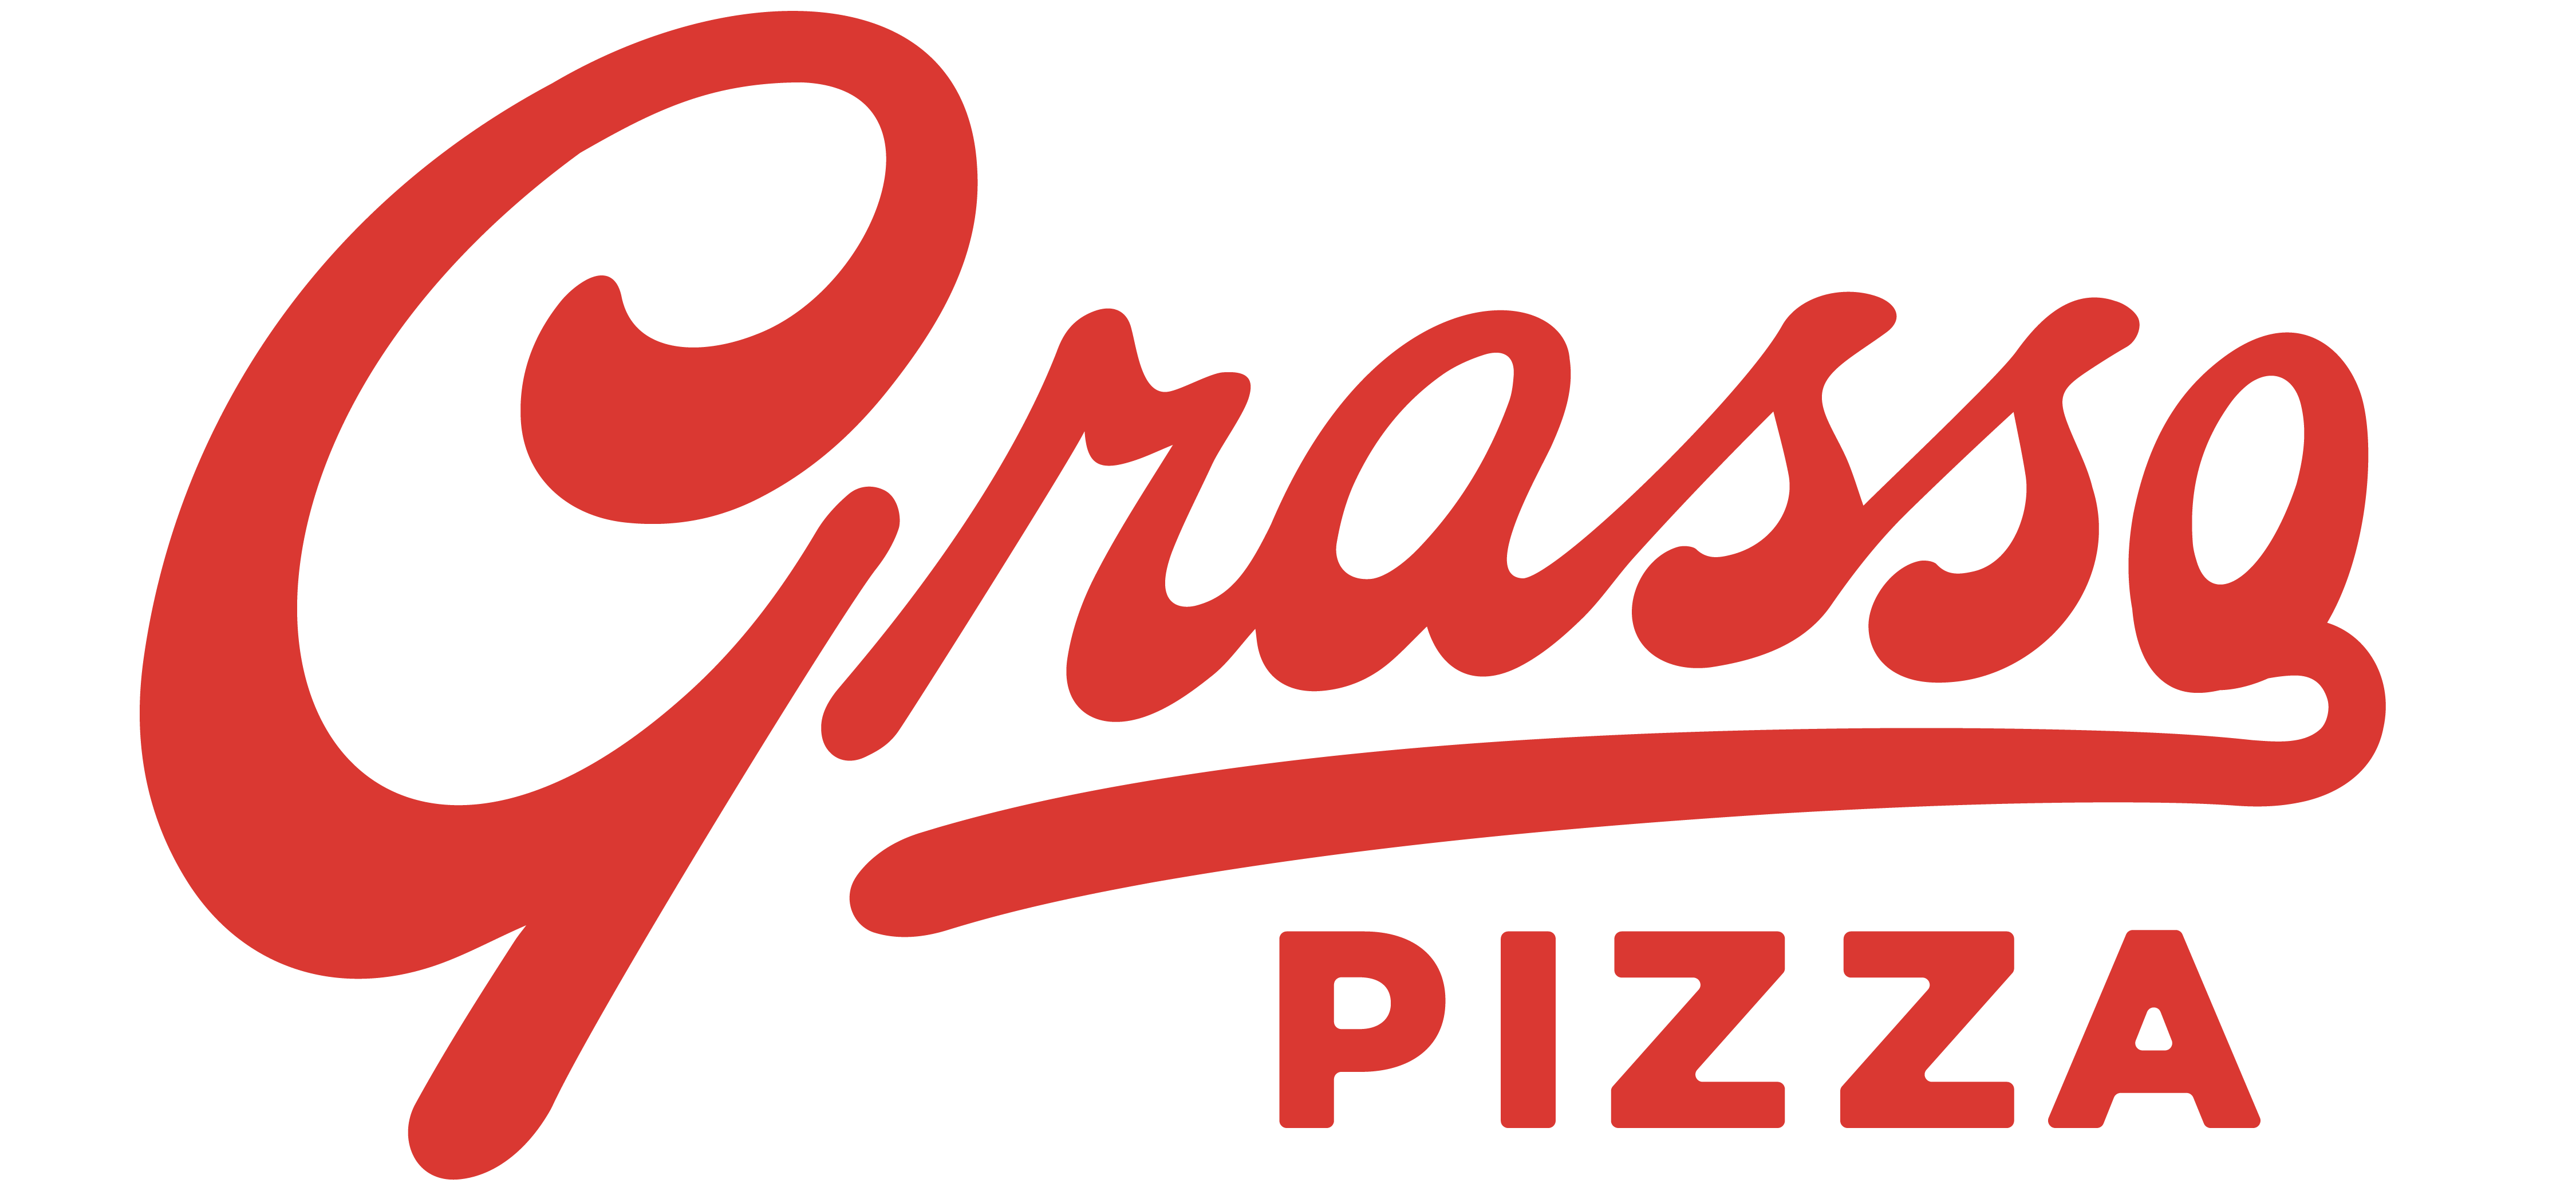 https://grassopizza.com/wp-content/uploads/2019/10/cropped-Grasso_logo.png